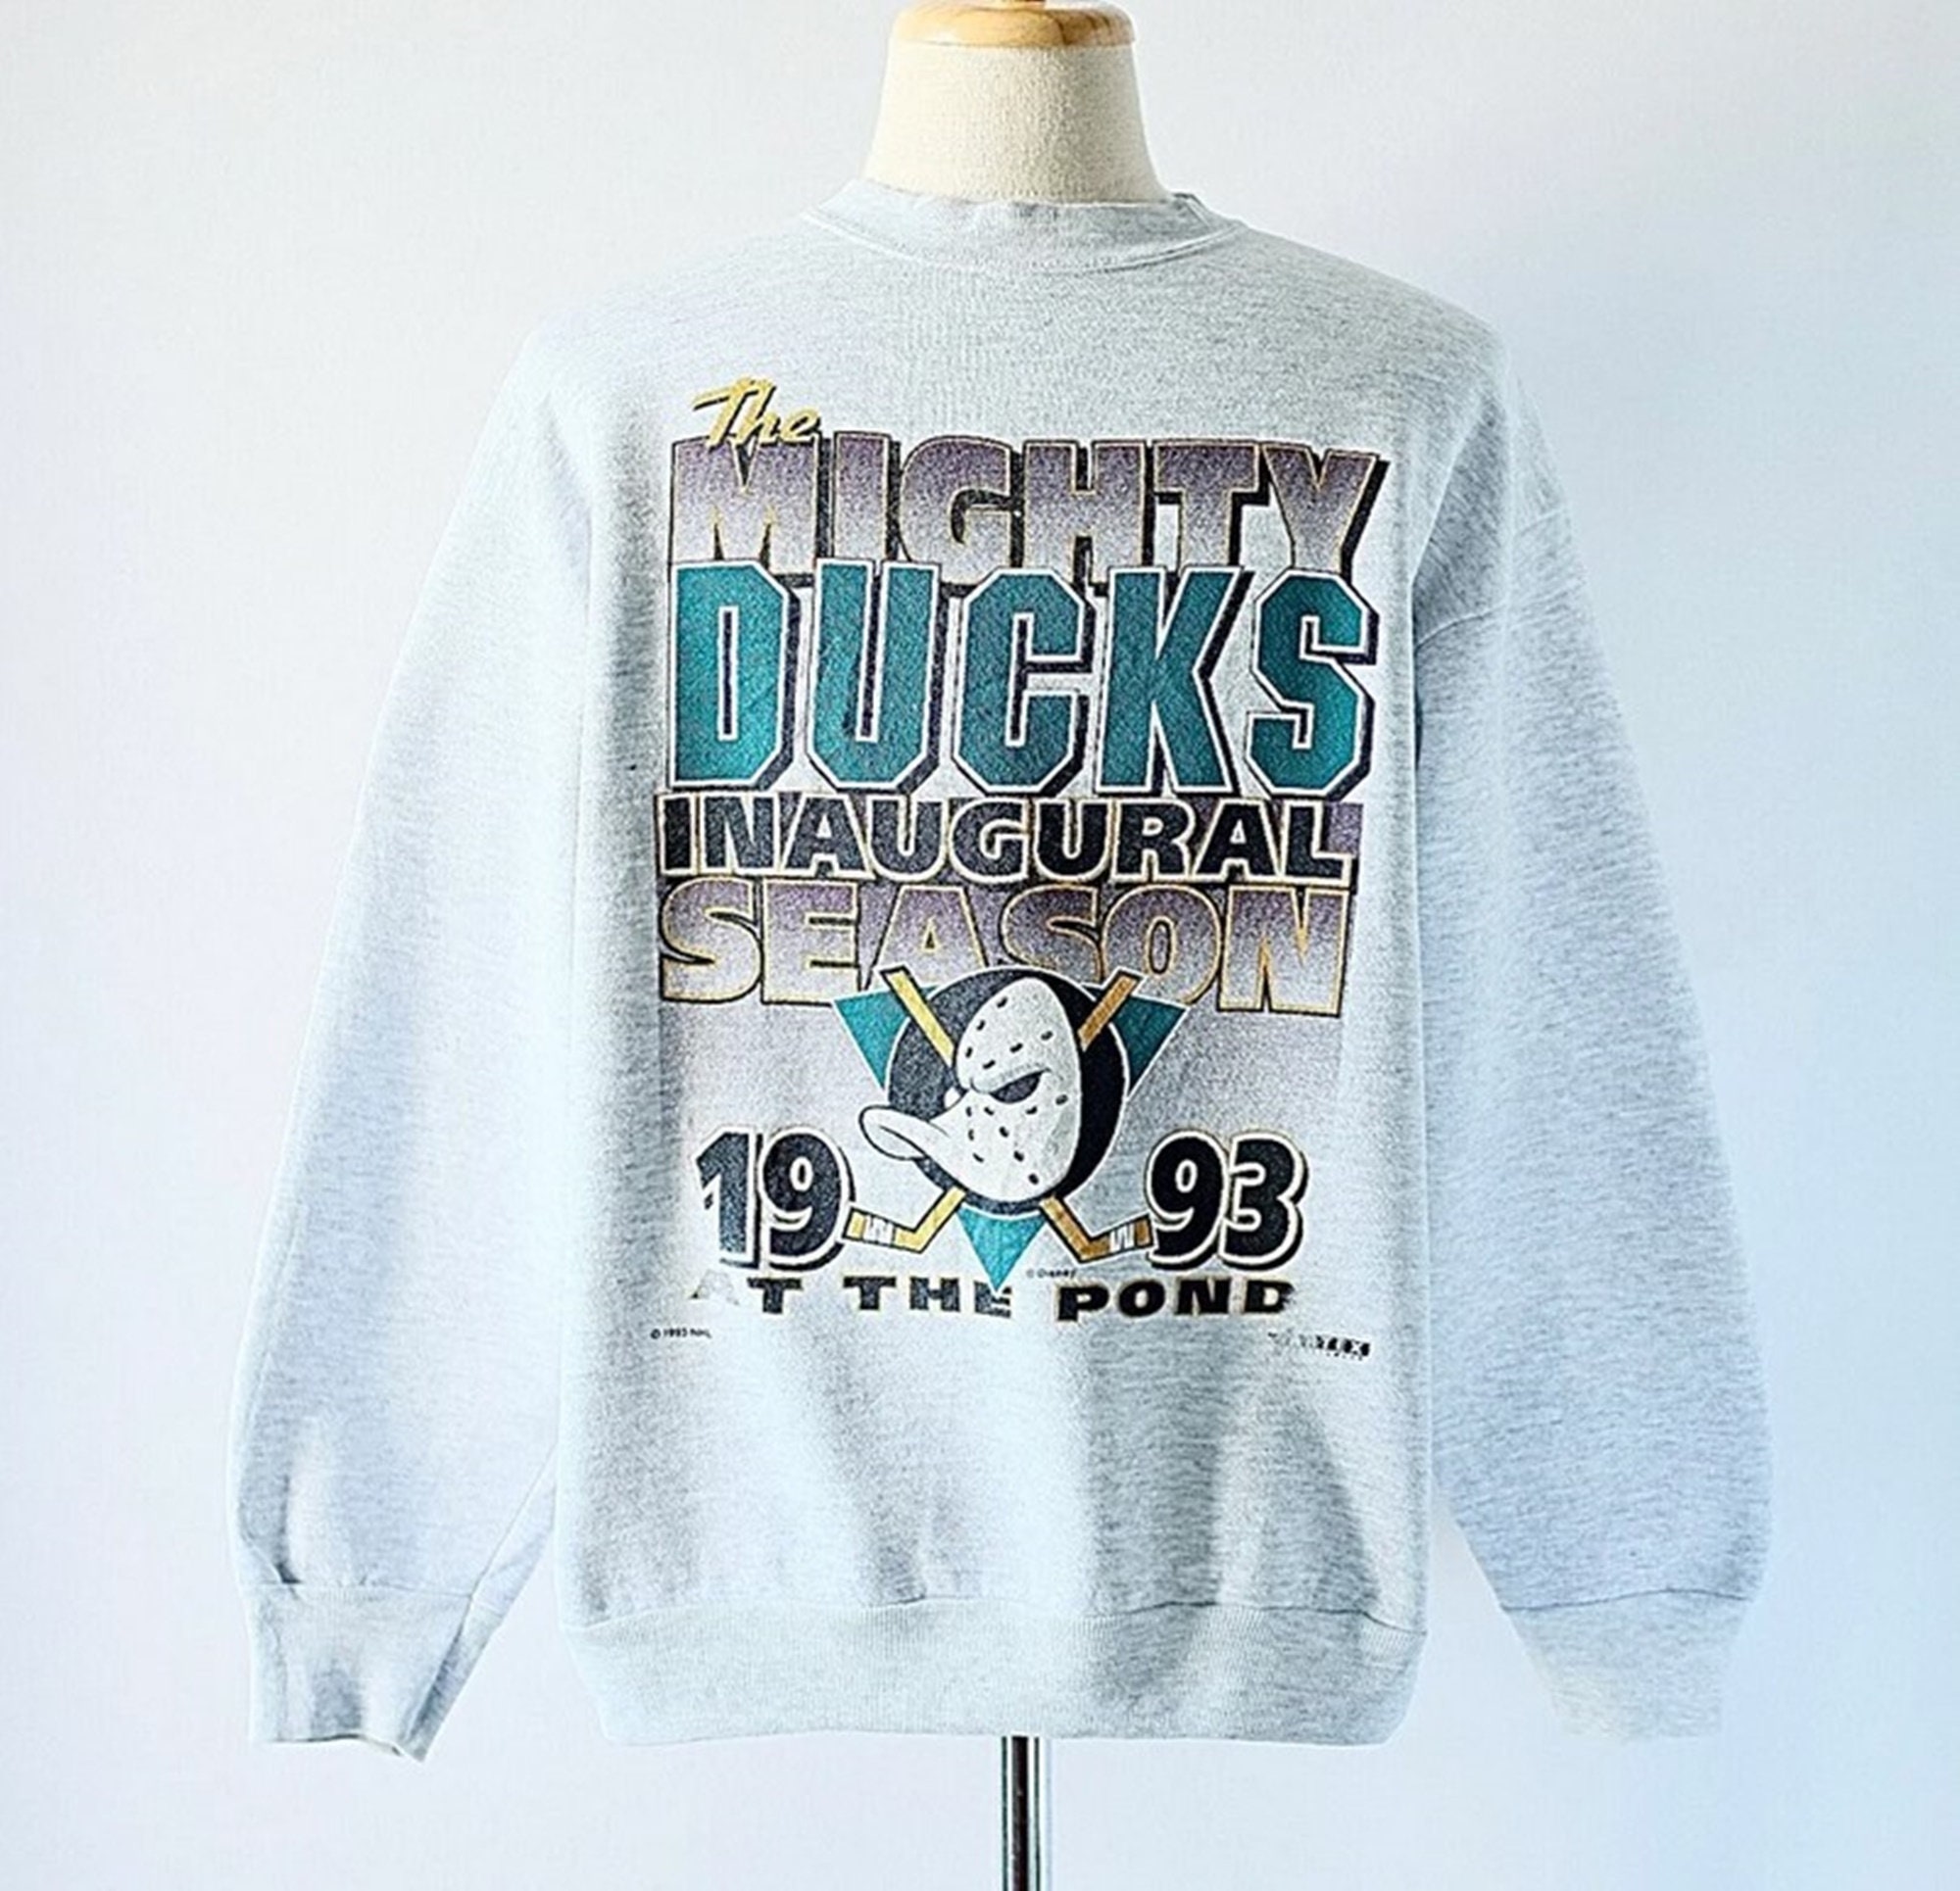 Anaheim Mighty Ducks Vintage Hockey Fan Shirt Sweatshirt